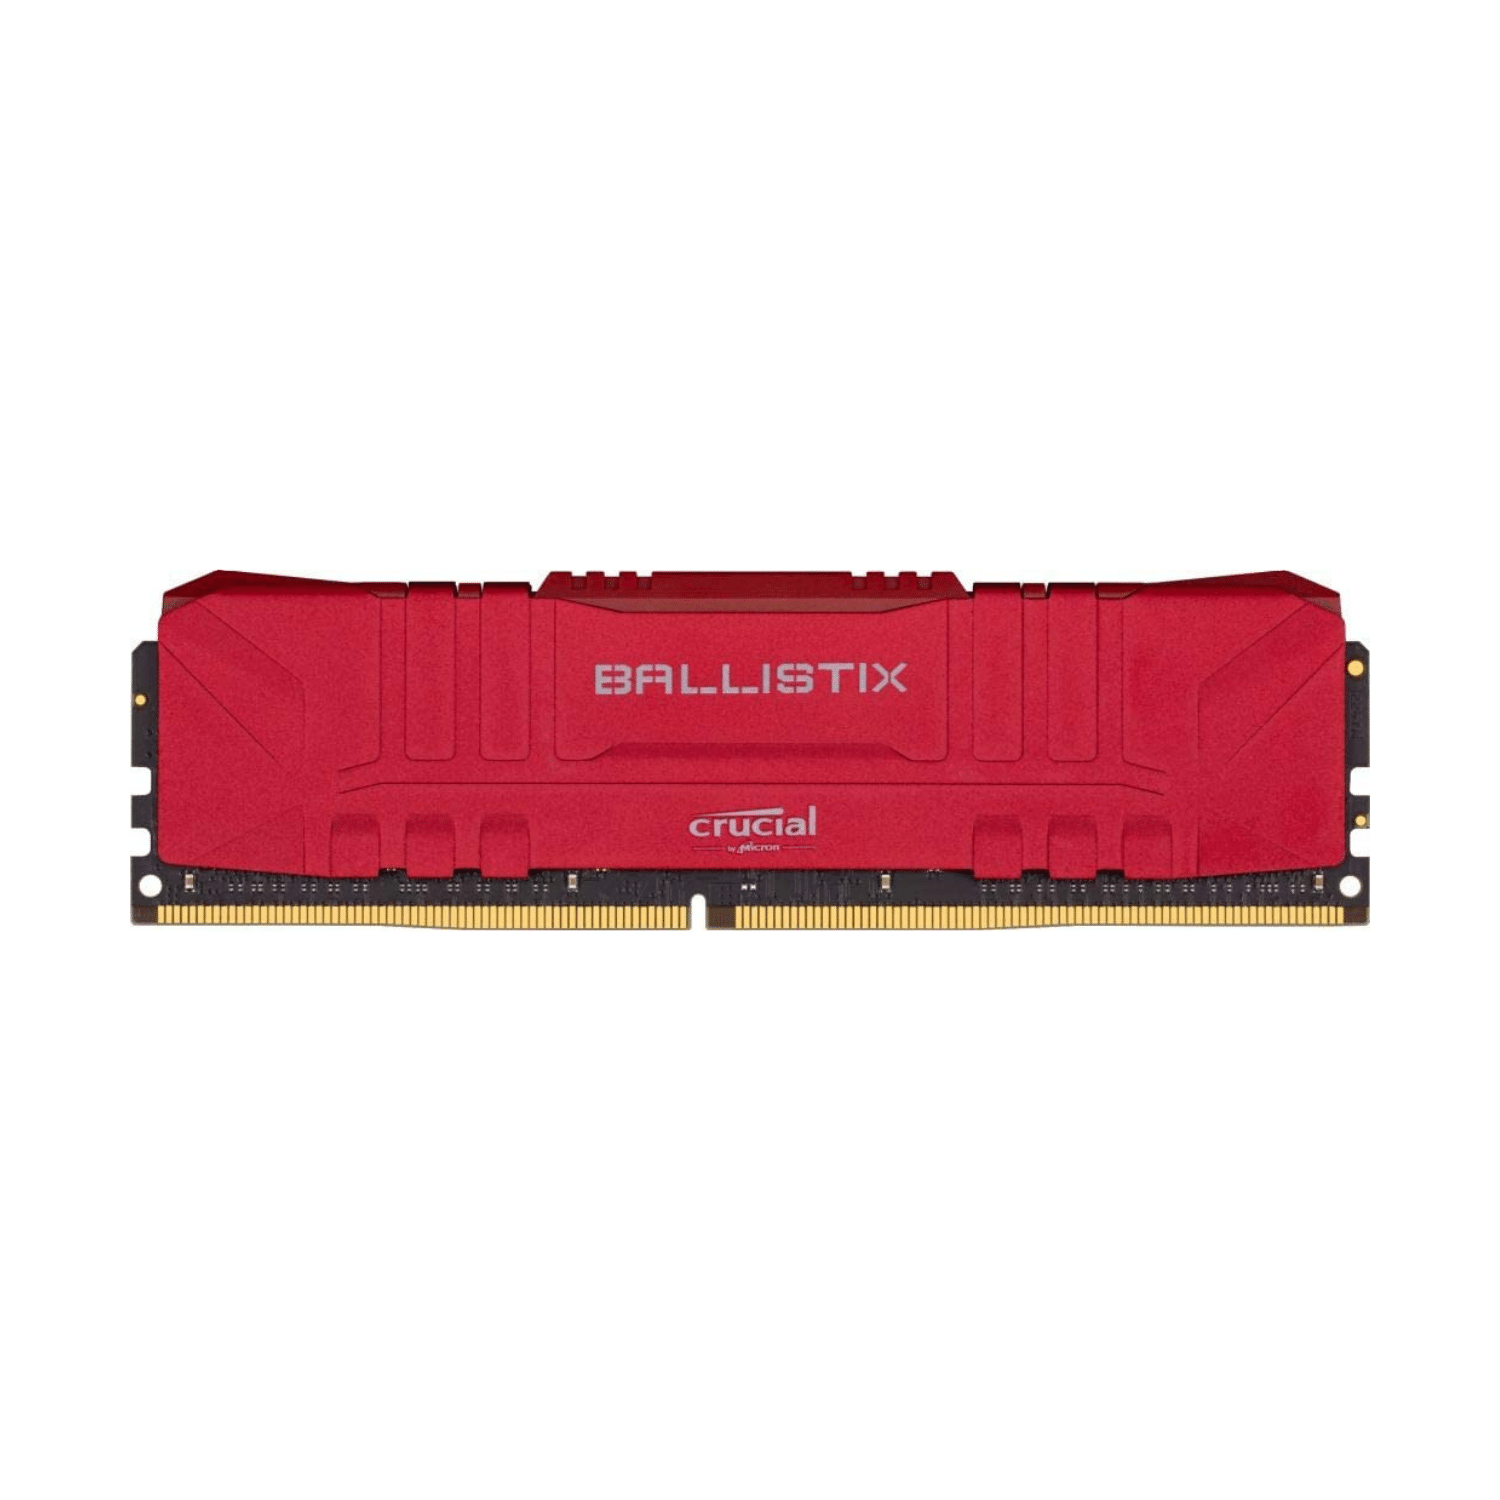 Crucial Ballistix 3200 MHz DDR4 DRAM Desktop Gaming Memory Kit 32GB (16GBx2), Red